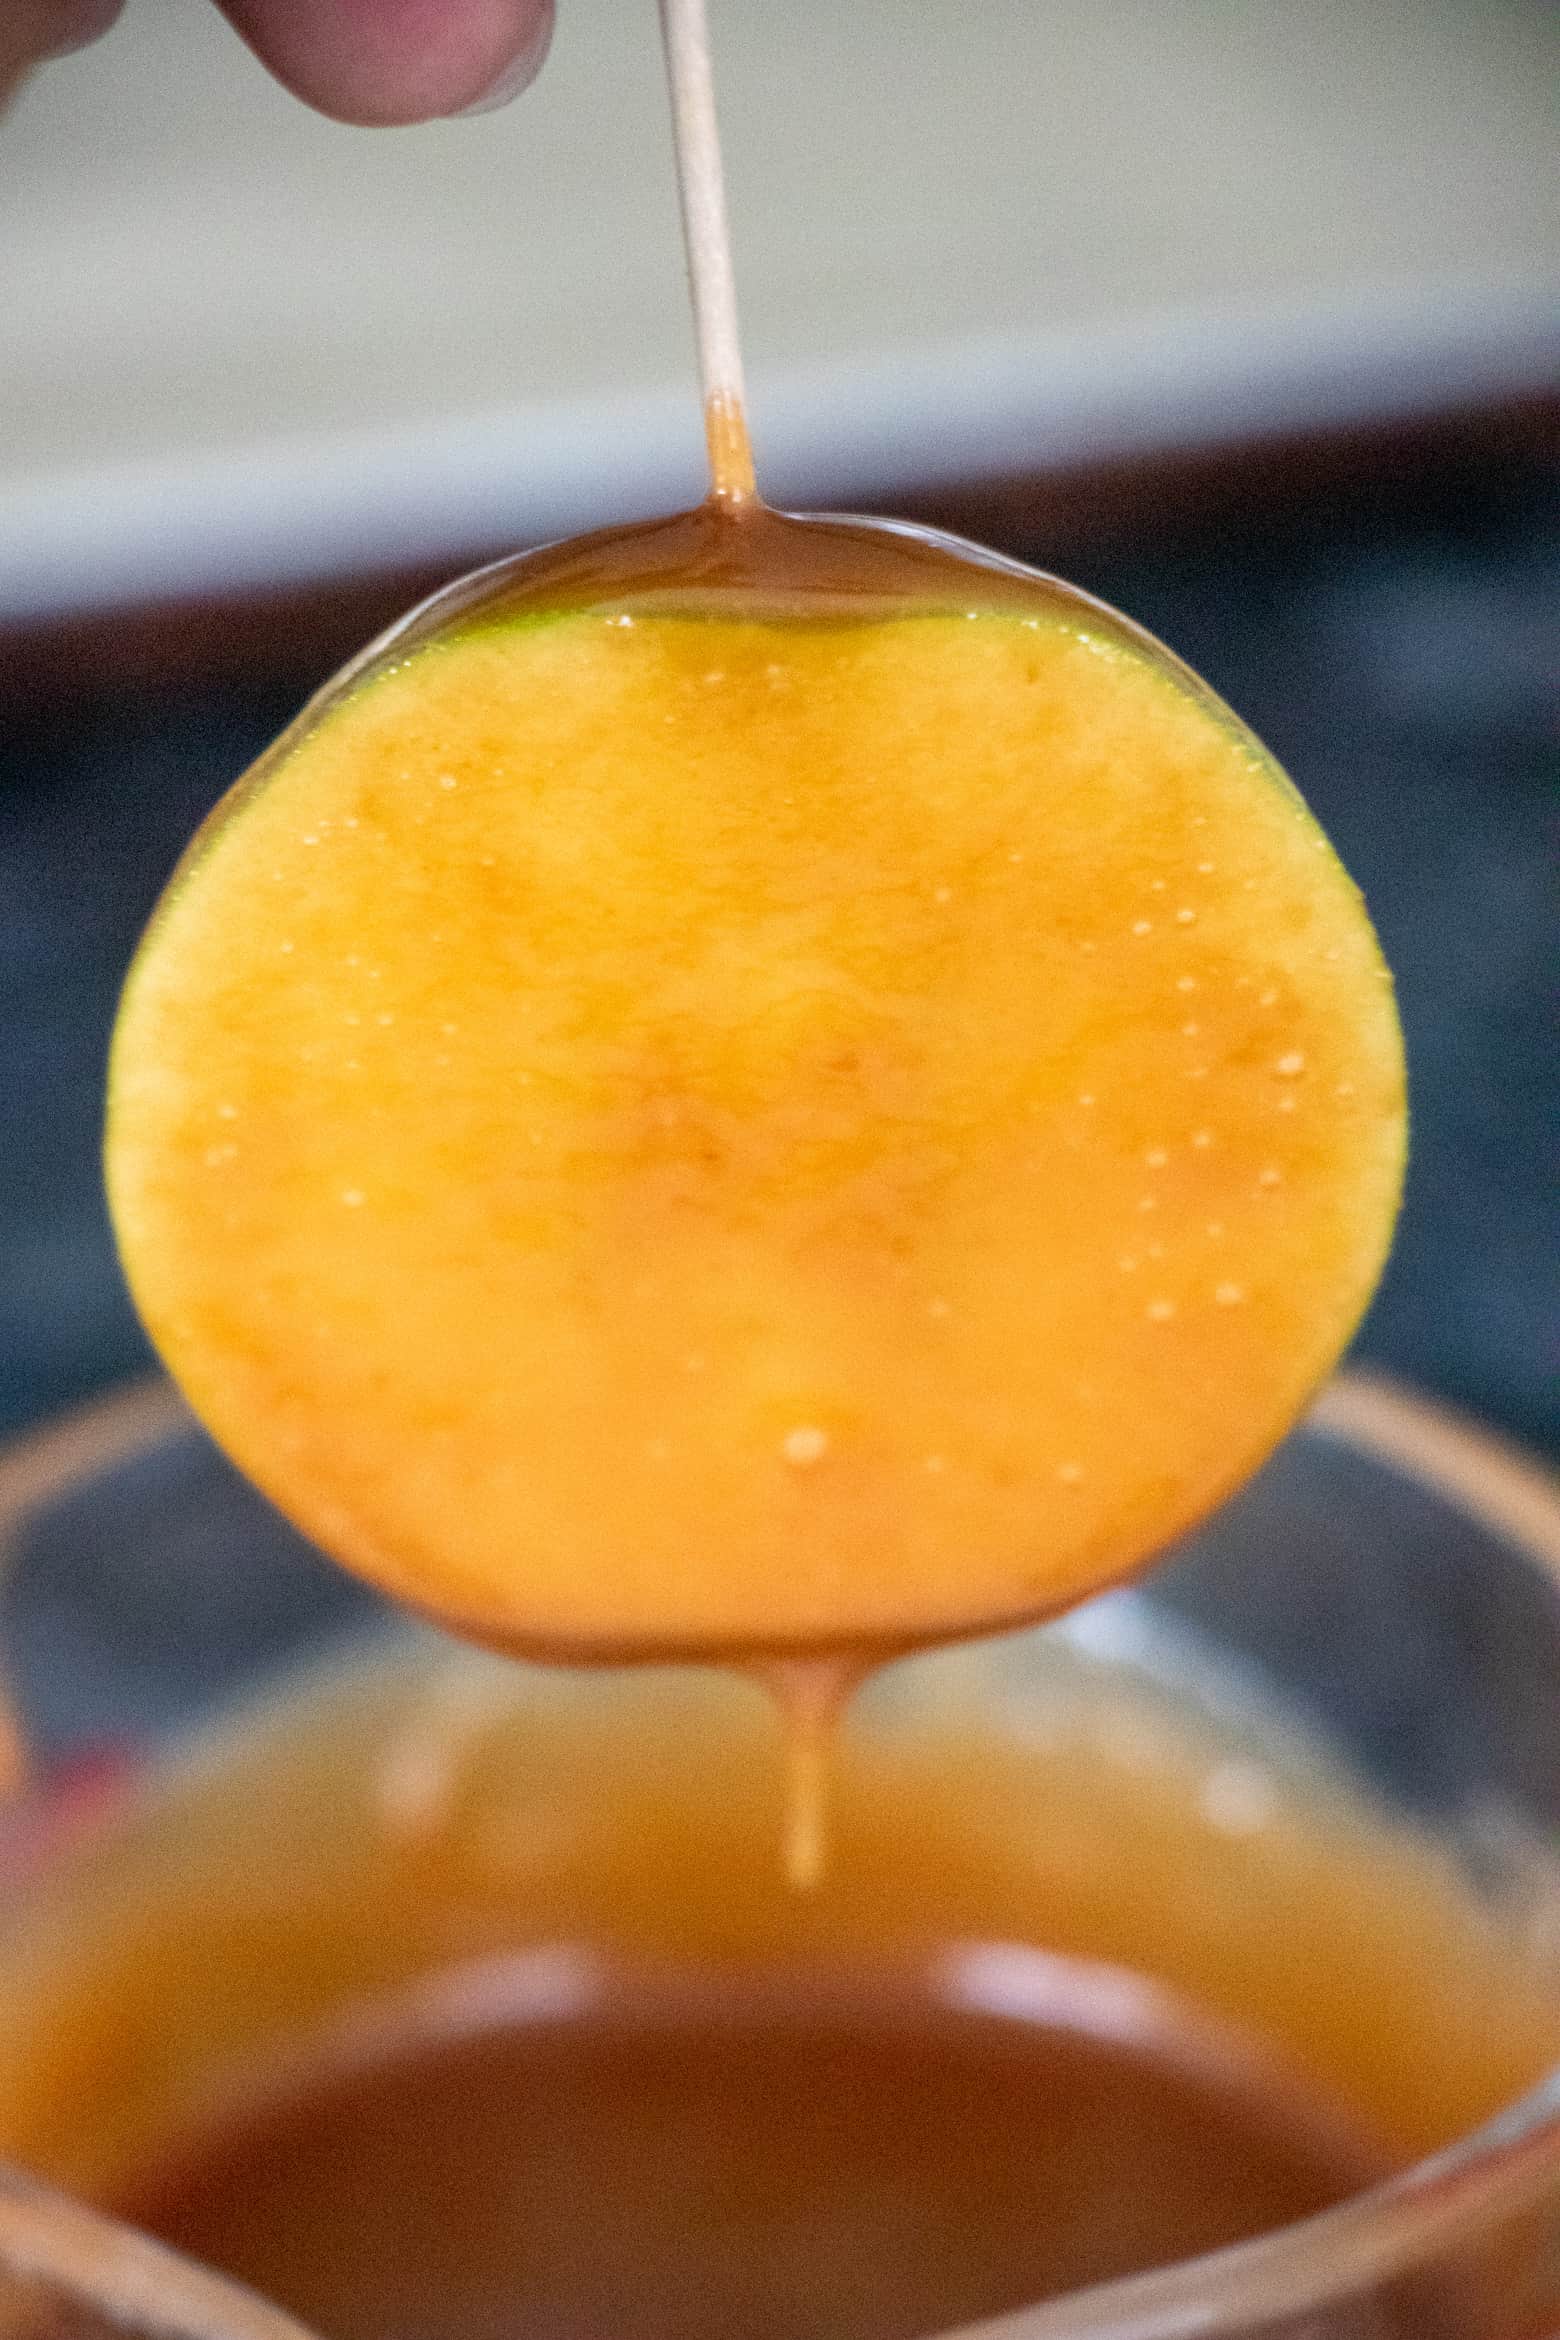 Apple sliced dipped in caramel sauce.